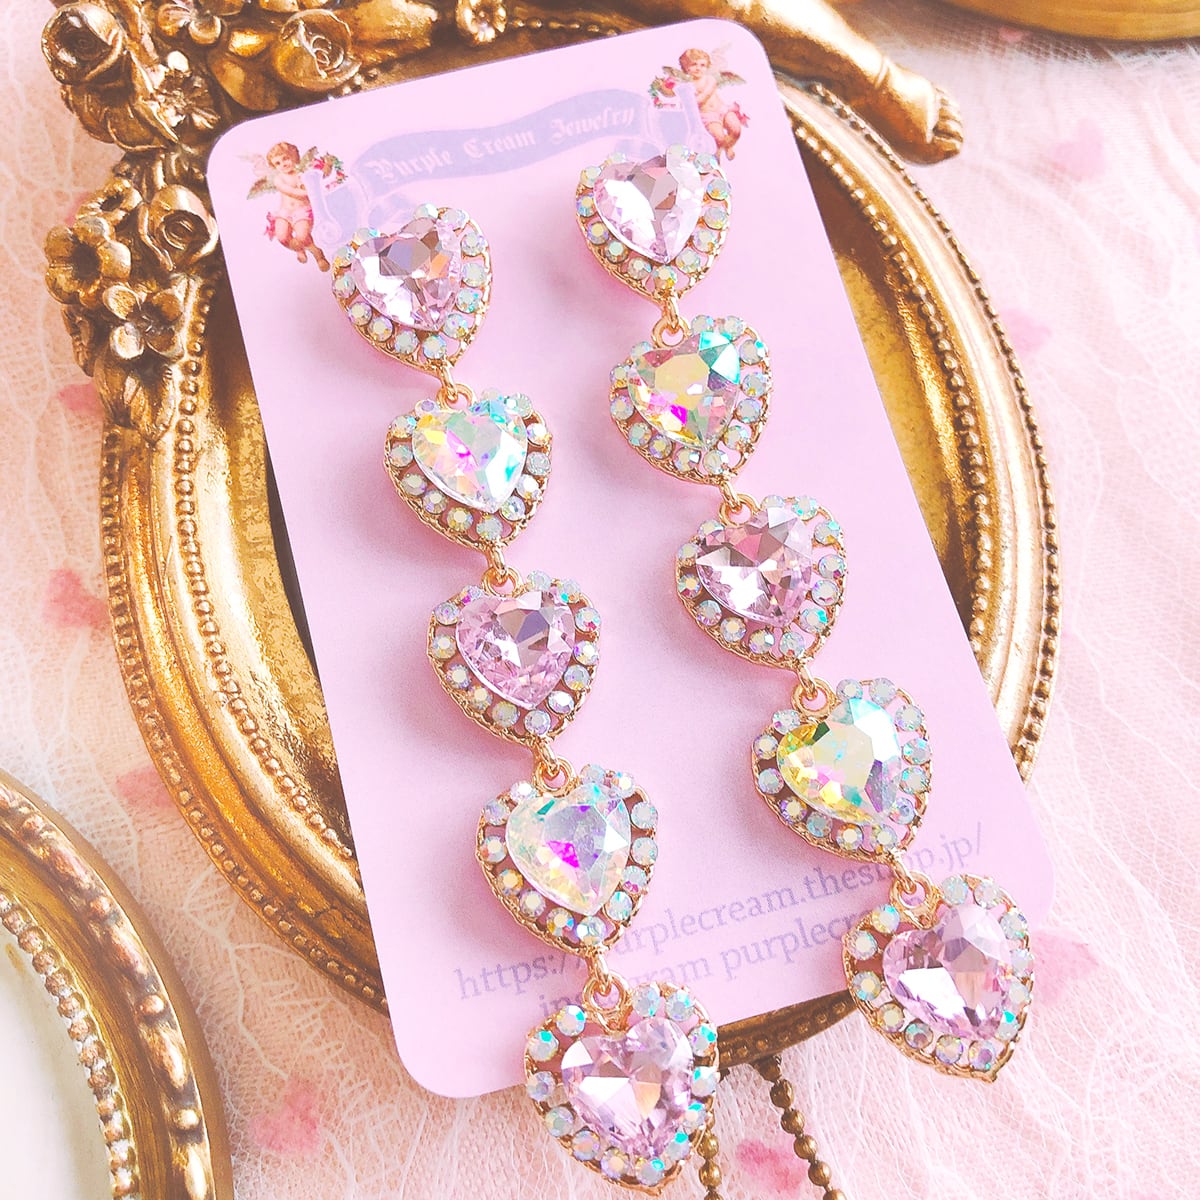 Purple Cream Sparkly Heart 5 Row Earrings P017 TWICE Nayeon Sana Earrings